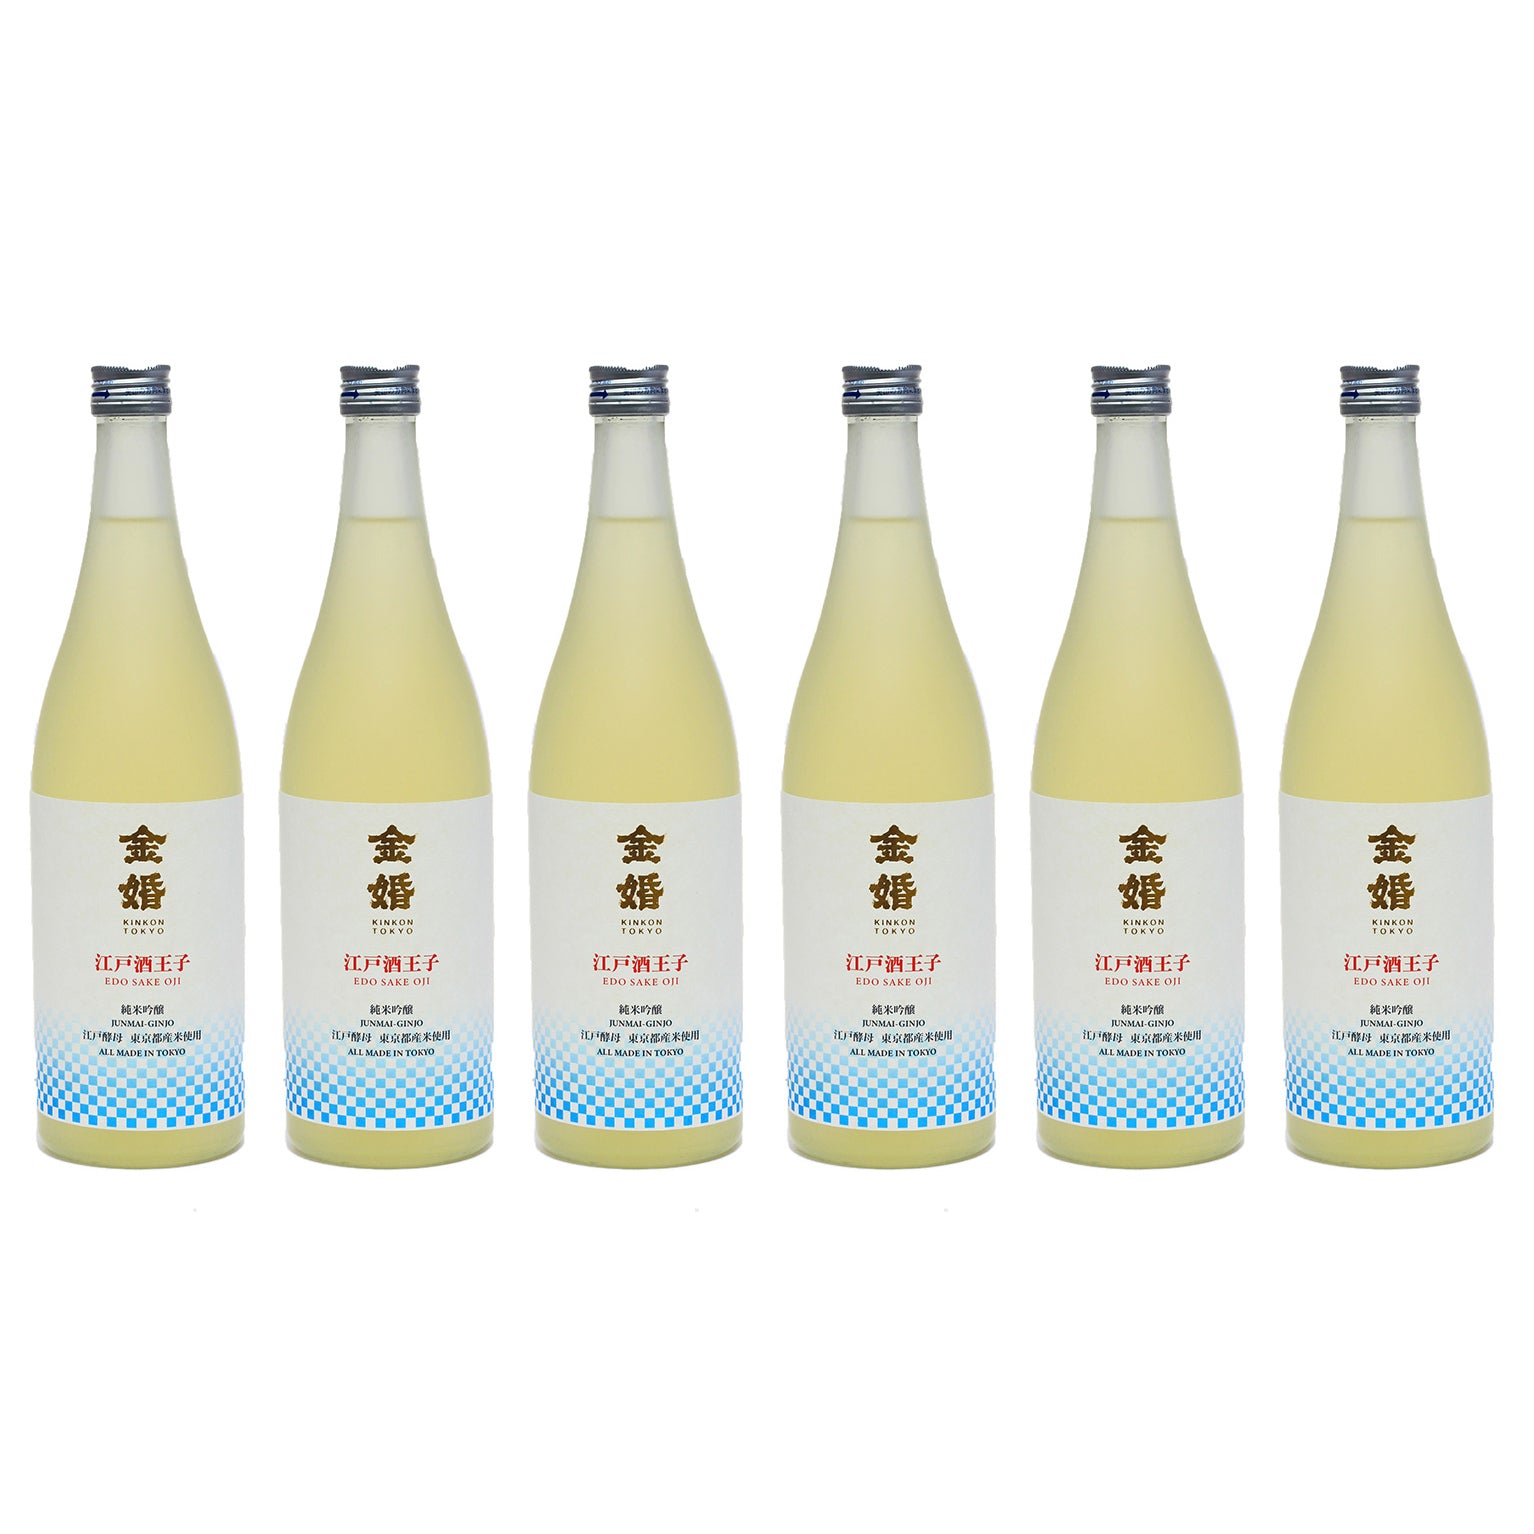 "Edo Sake Oji" (720ml) x 6 Bottle Pack